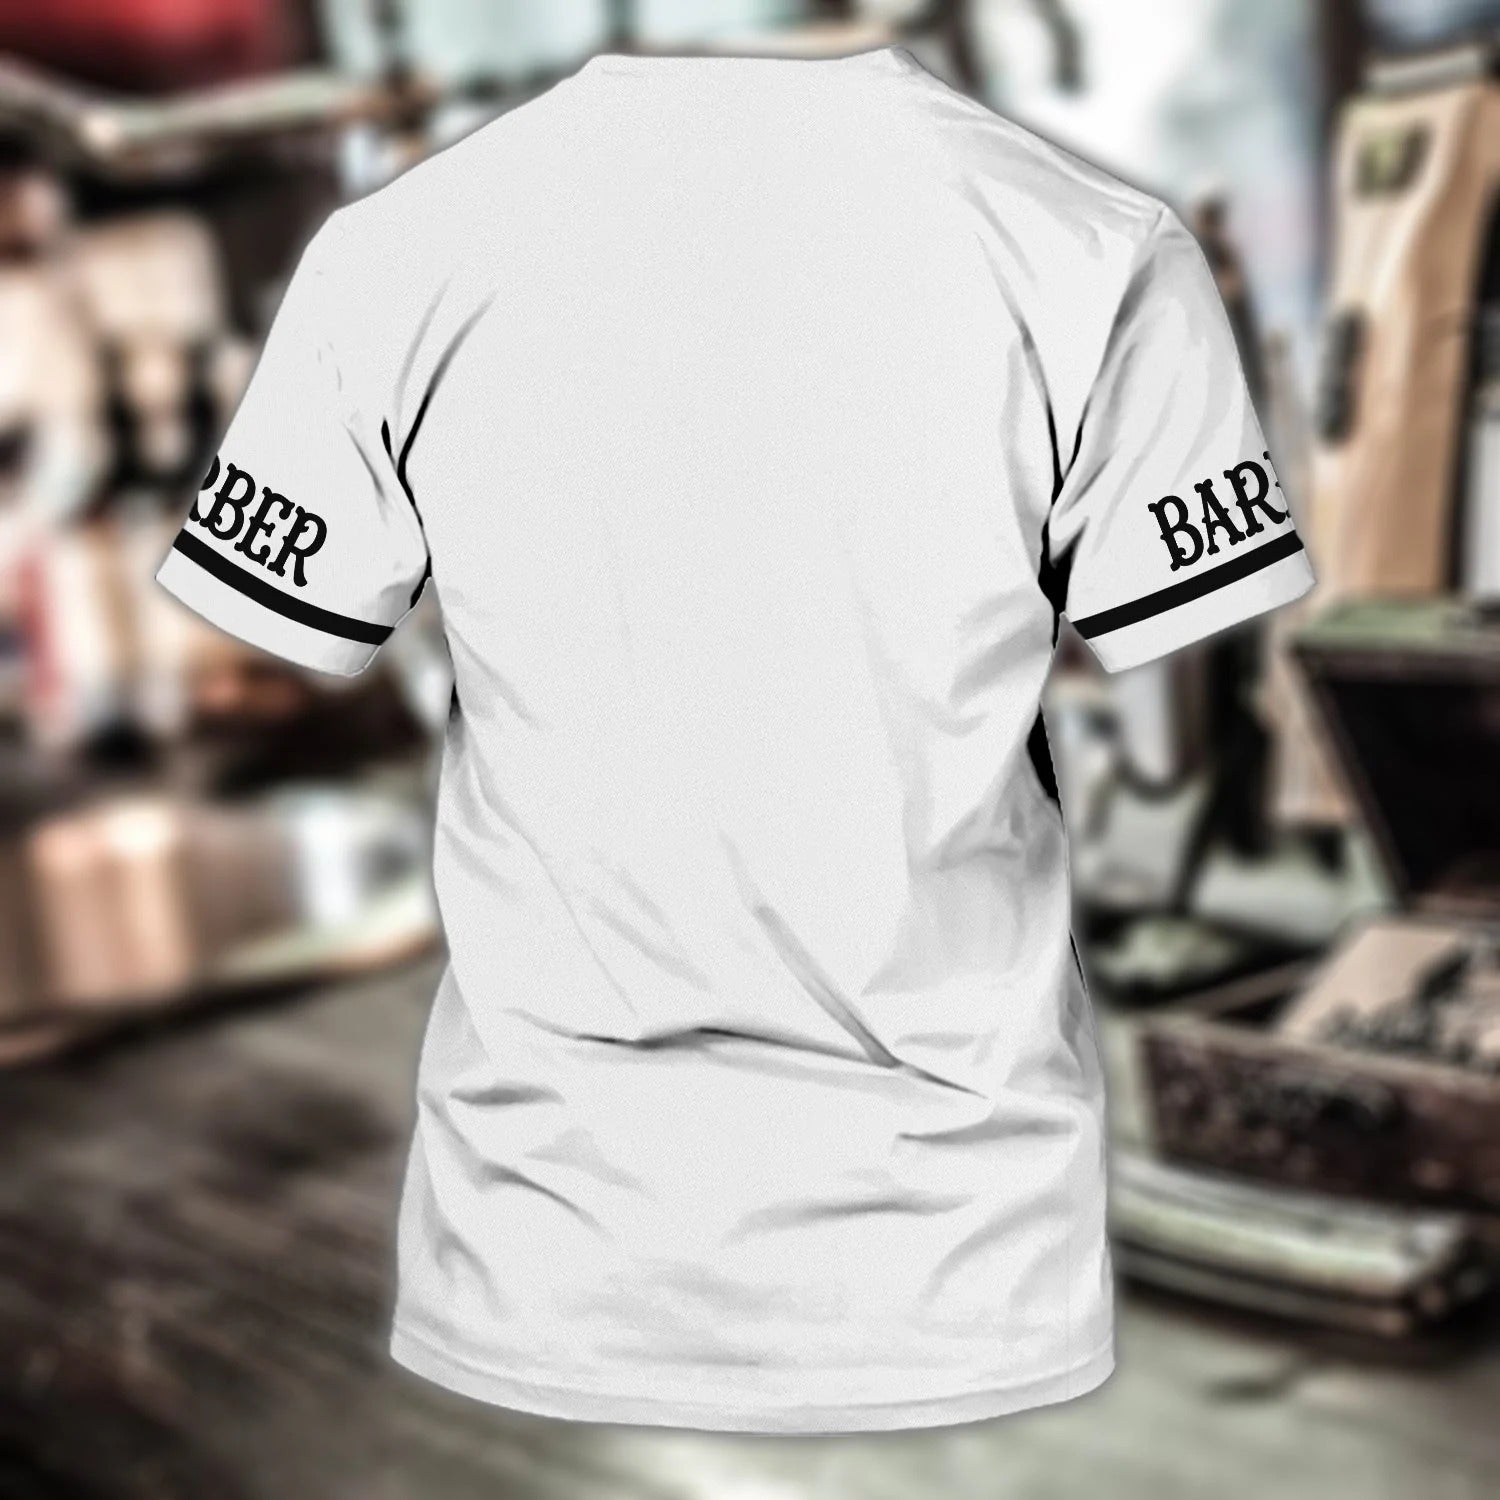 Personalized Name 3D Sublimation Barber Tshirt/ Gift For Barber Men Women/ White Barber Tee Shirt